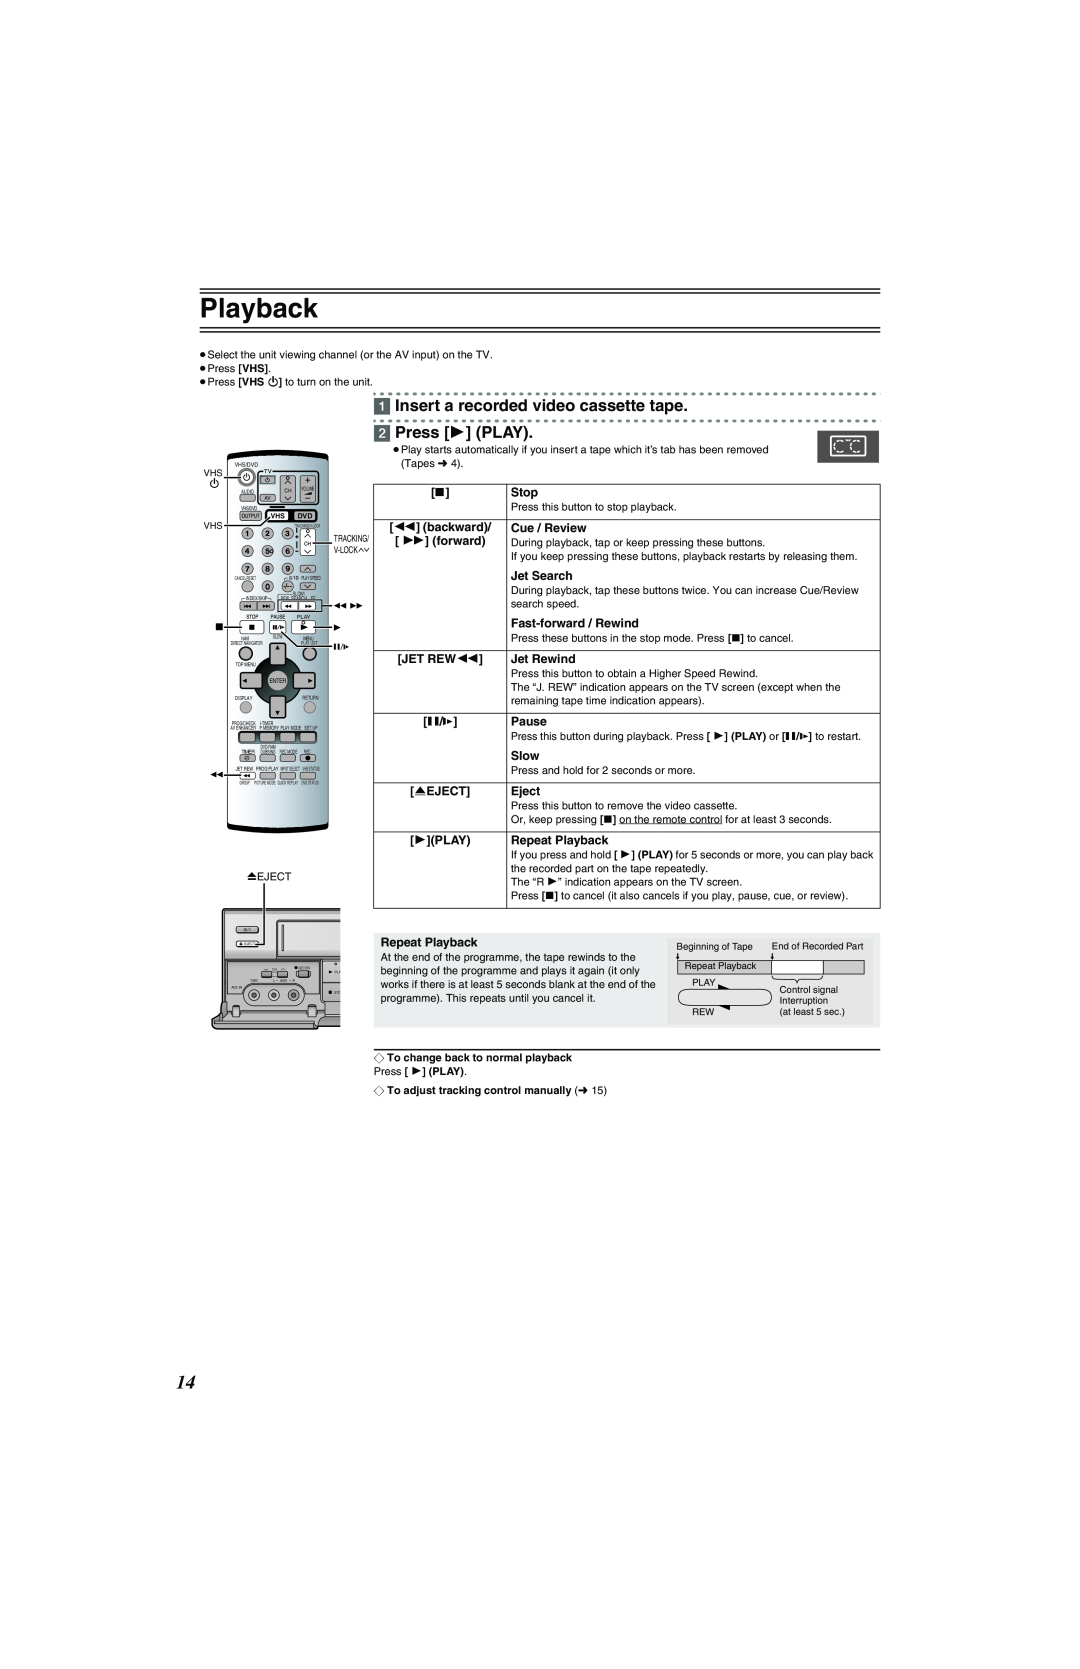 Panasonic NV-VP32 Series manual Playback, Insert a recorded video cassette tape 2 Press 1 PLAY 